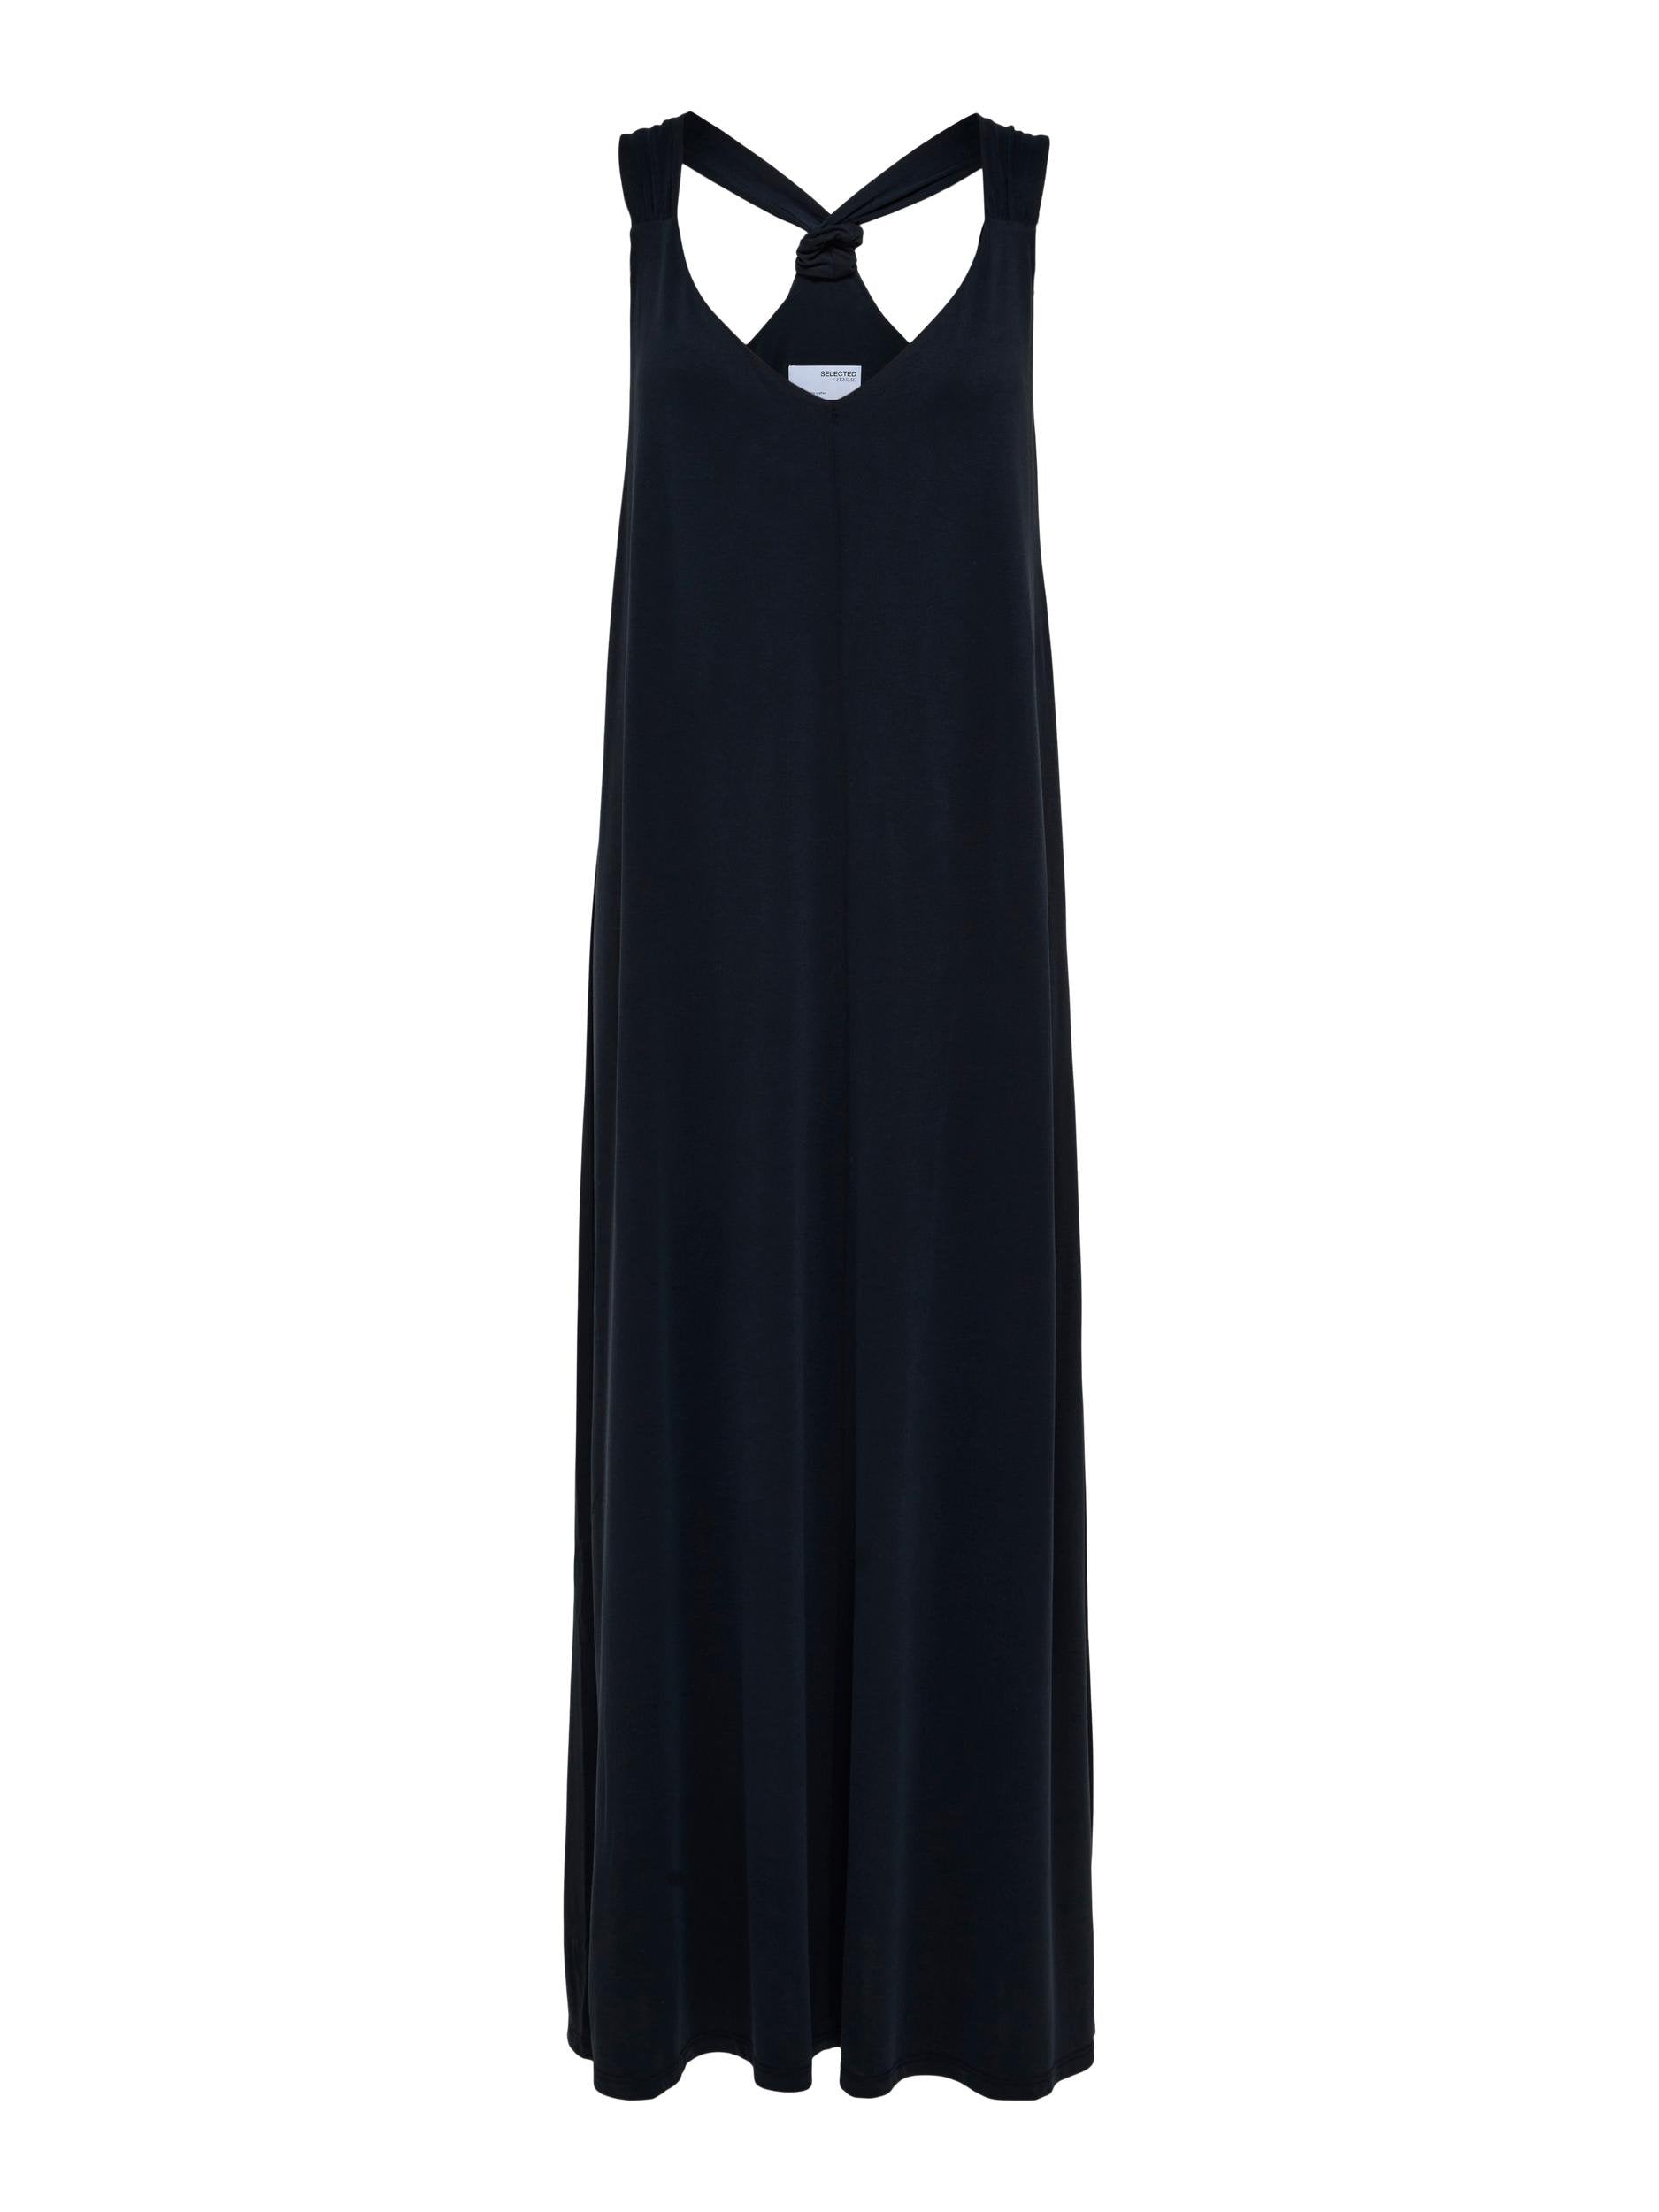 Roberta black knot dress | Selected Femme